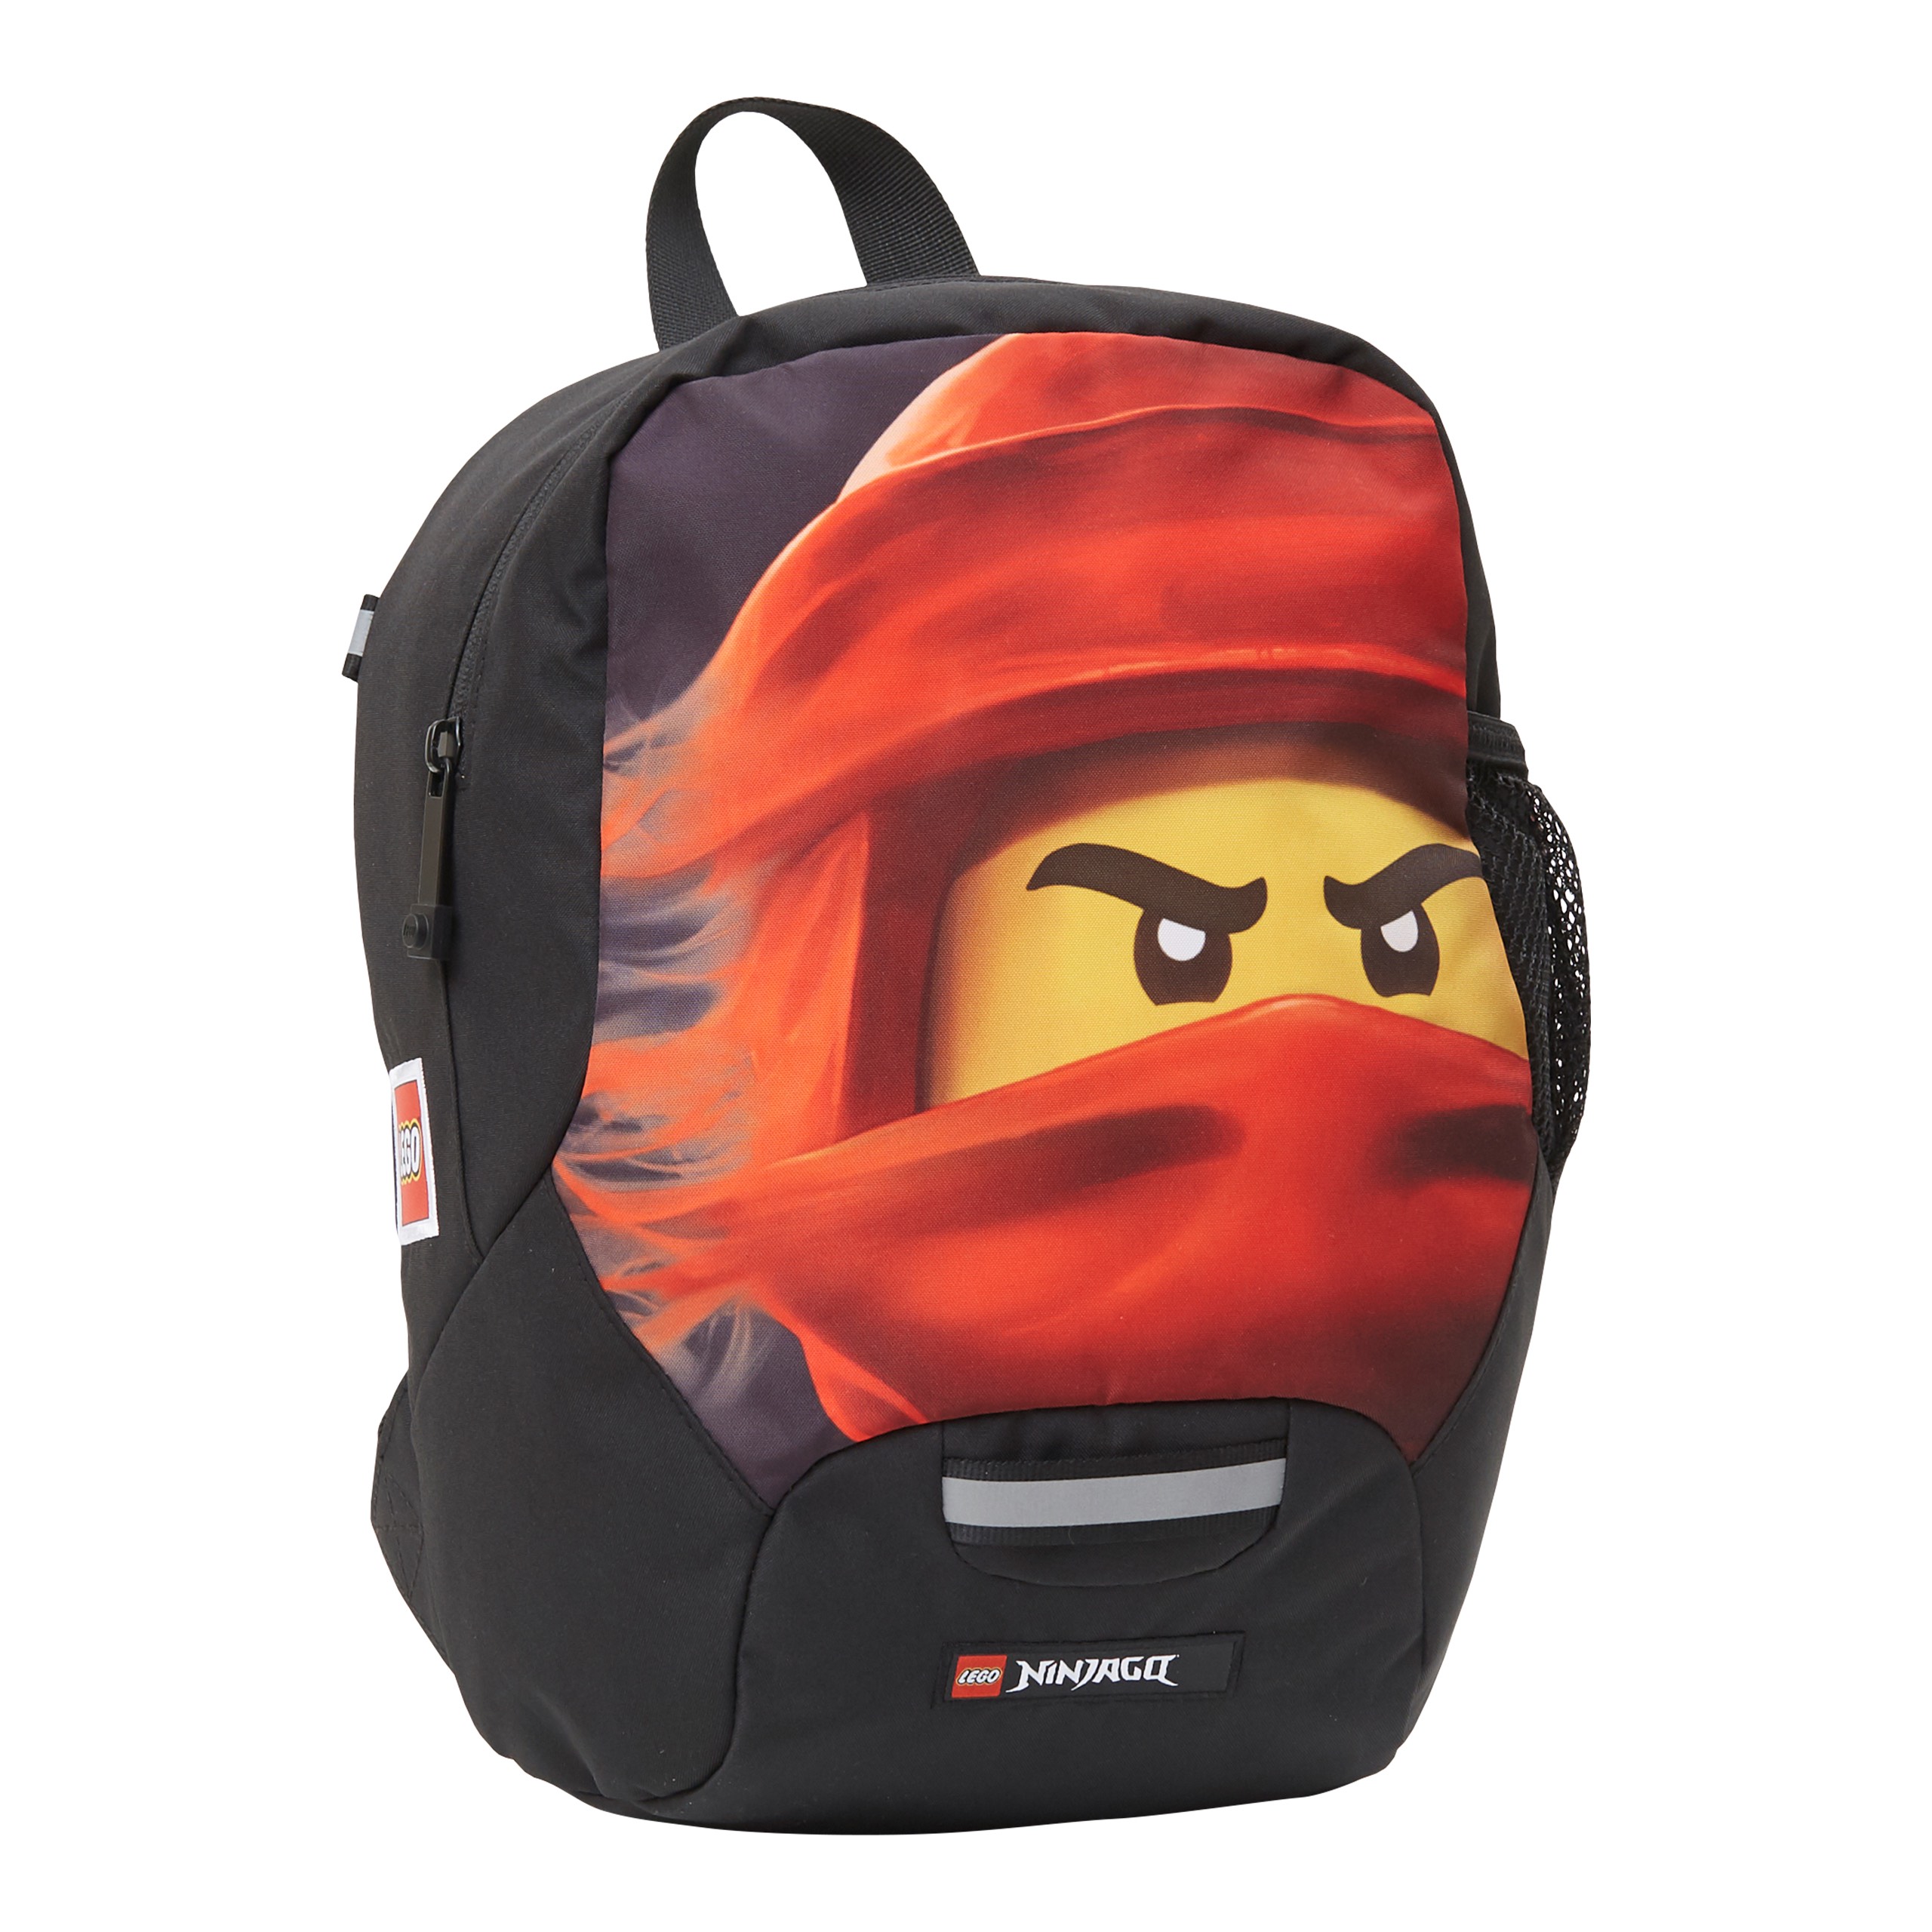 LEGO -GPL20222-2201 Ninja School Backpack, Green and Black (GPL Bags  GPL20222-2201)